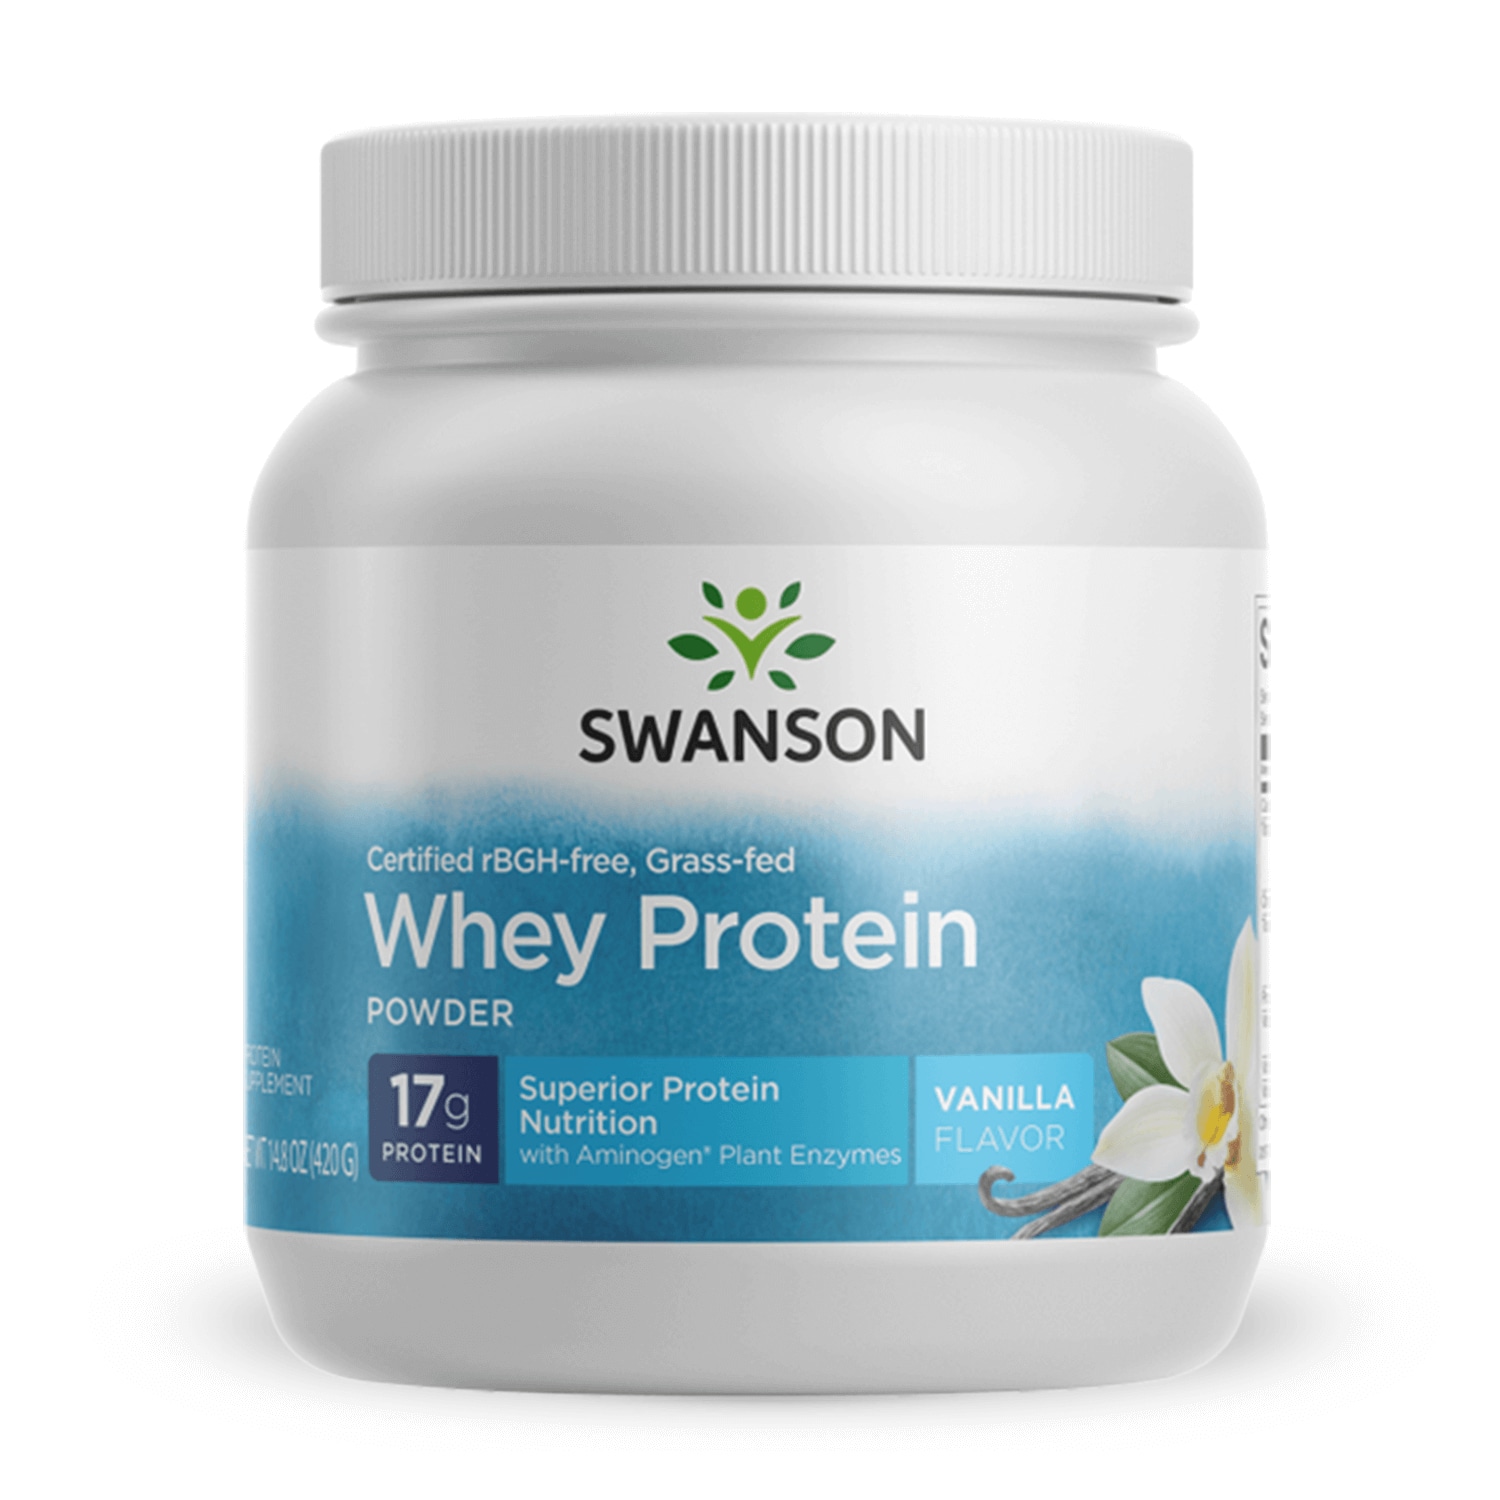 Swanson Ultra Certified rbgh-Free Grass-Fed Whey Protein Powder- Vanilla | 14.8 oz Powder